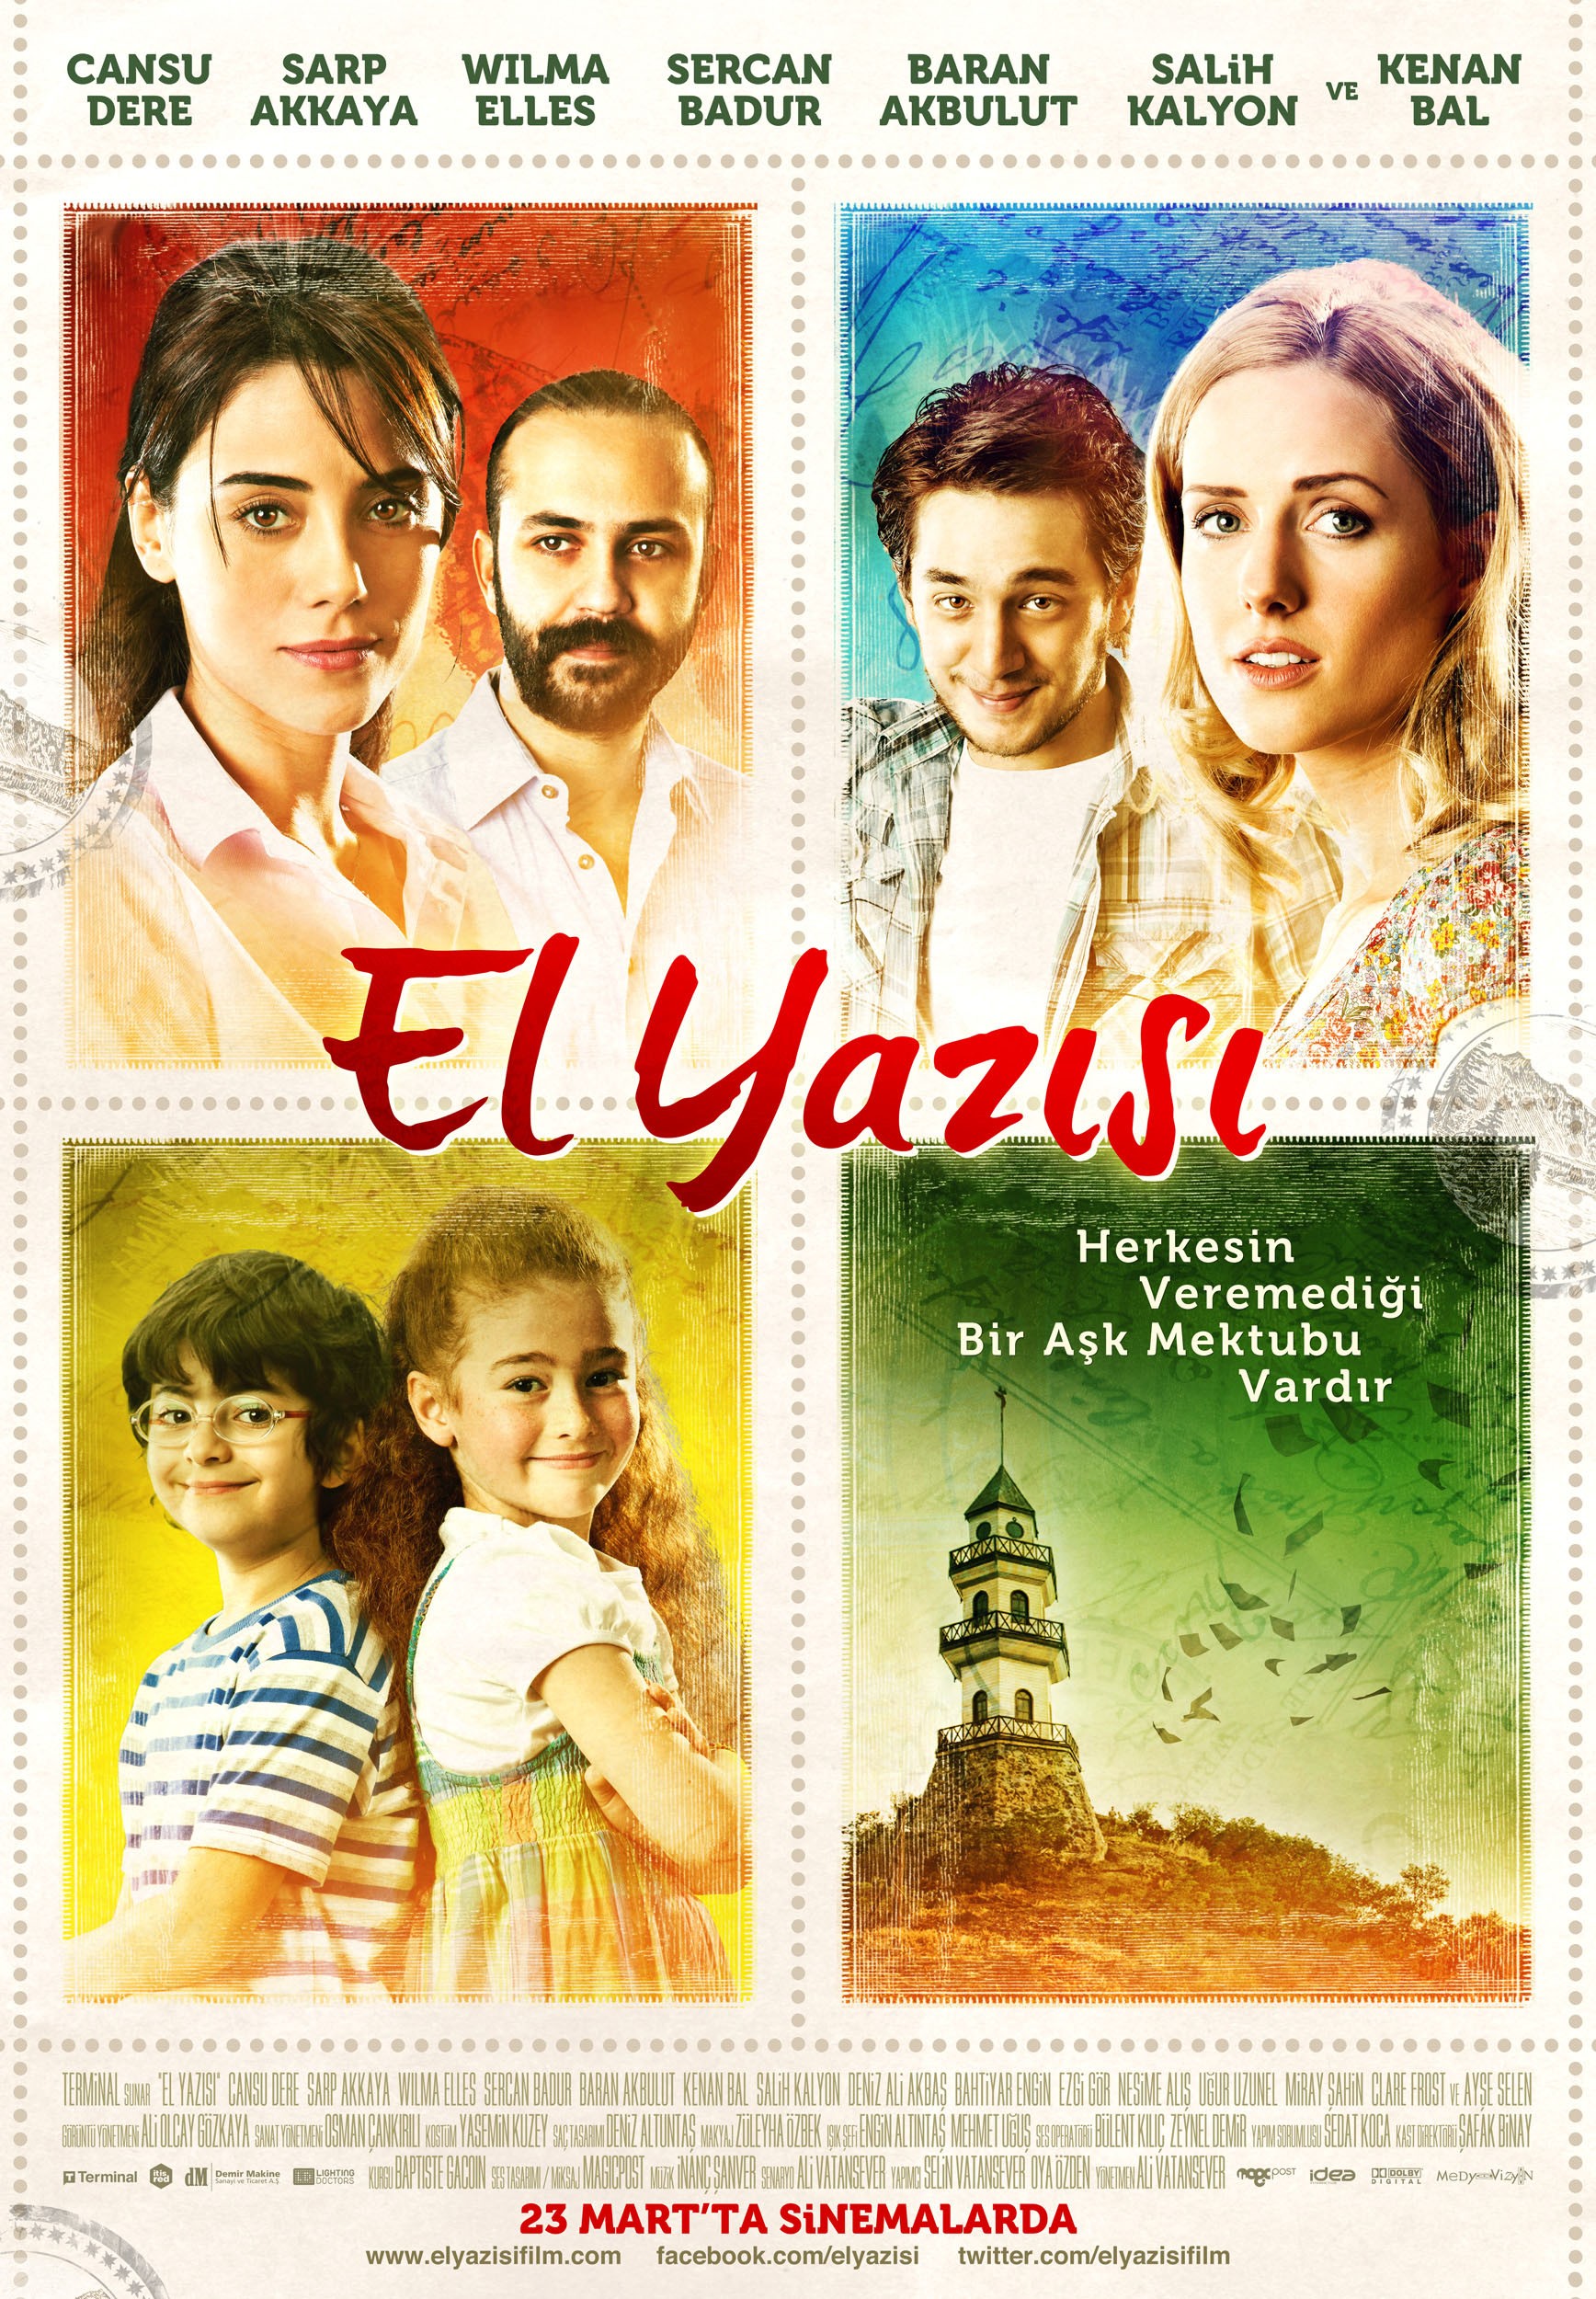 Mega Sized Movie Poster Image for El Yazisi (#2 of 6)